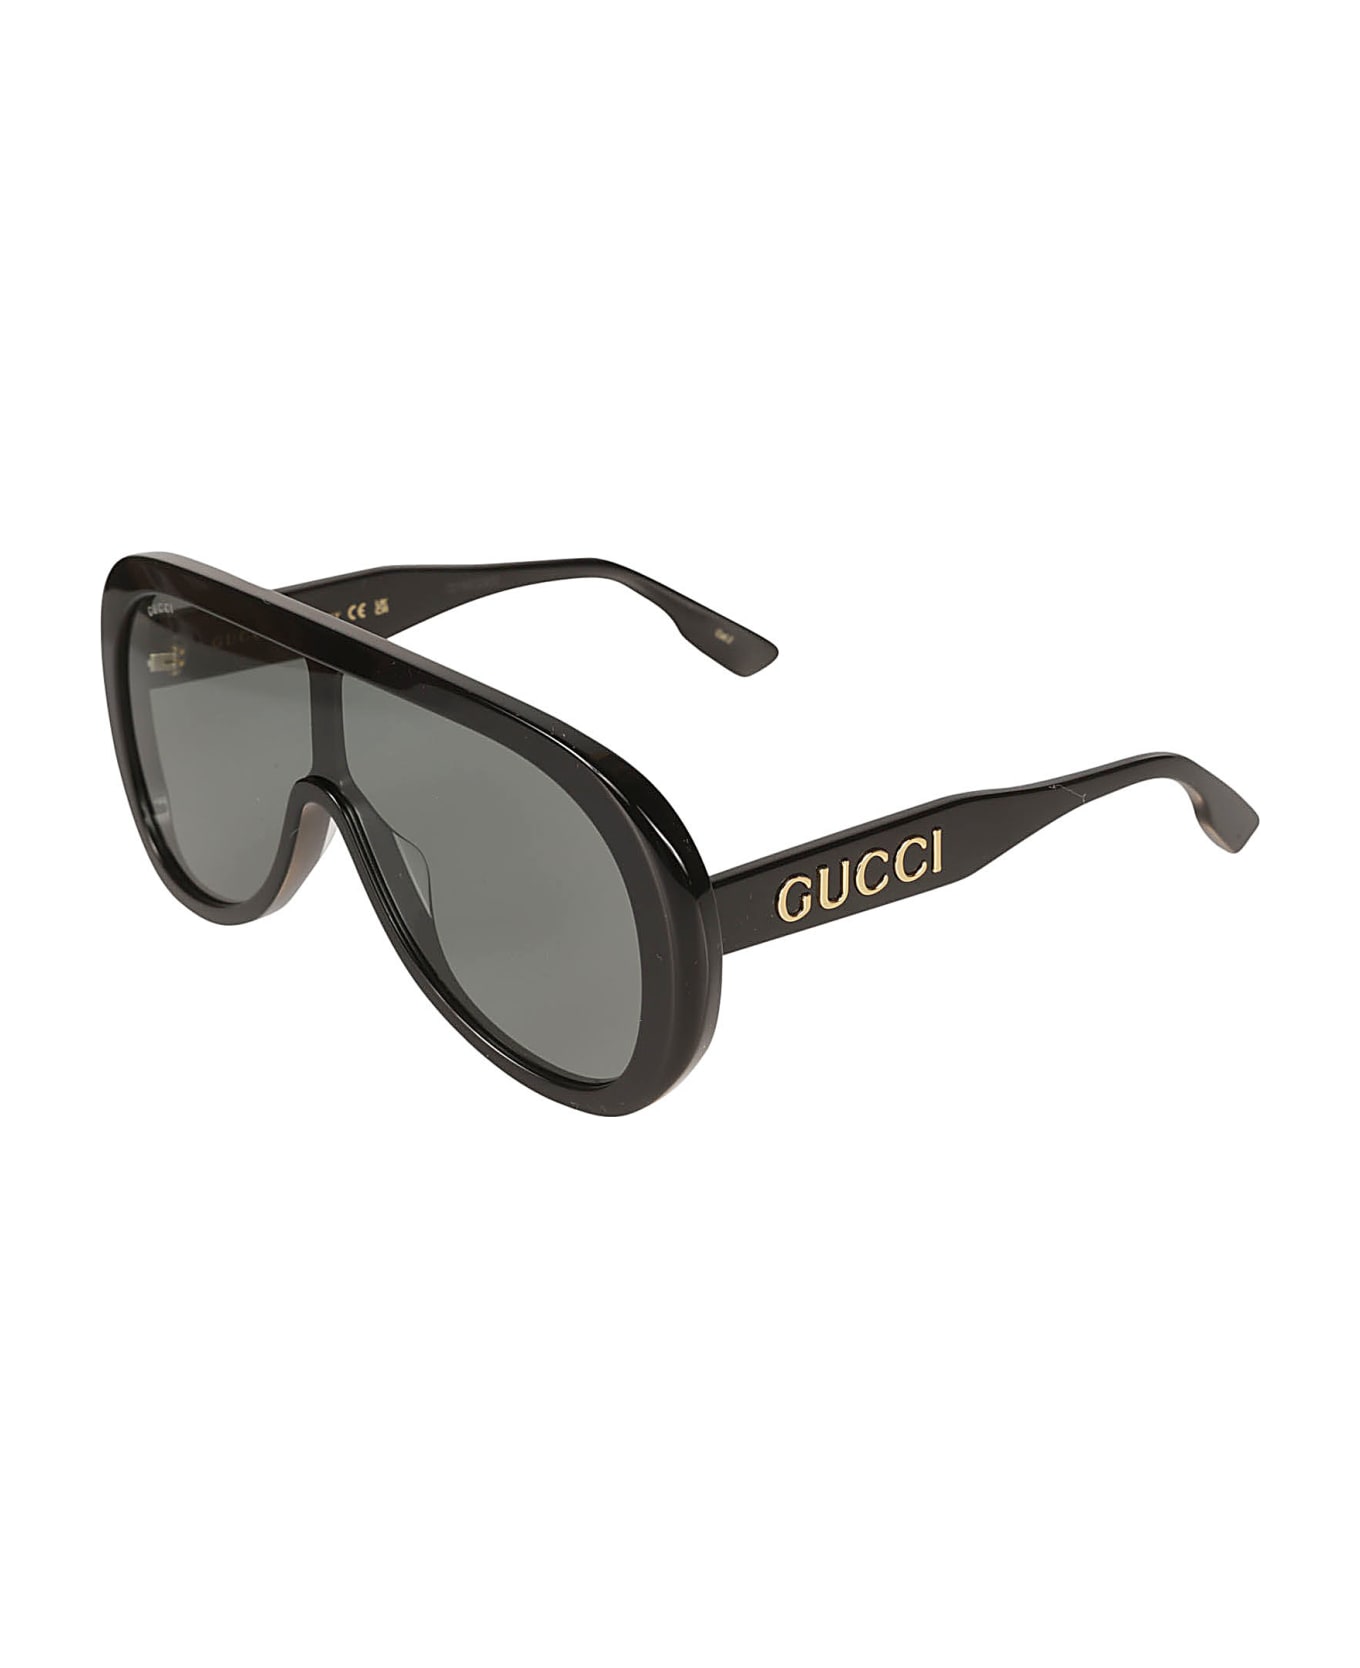 Gucci Eyewear Mask Frame Sunglasses - Black/Grey